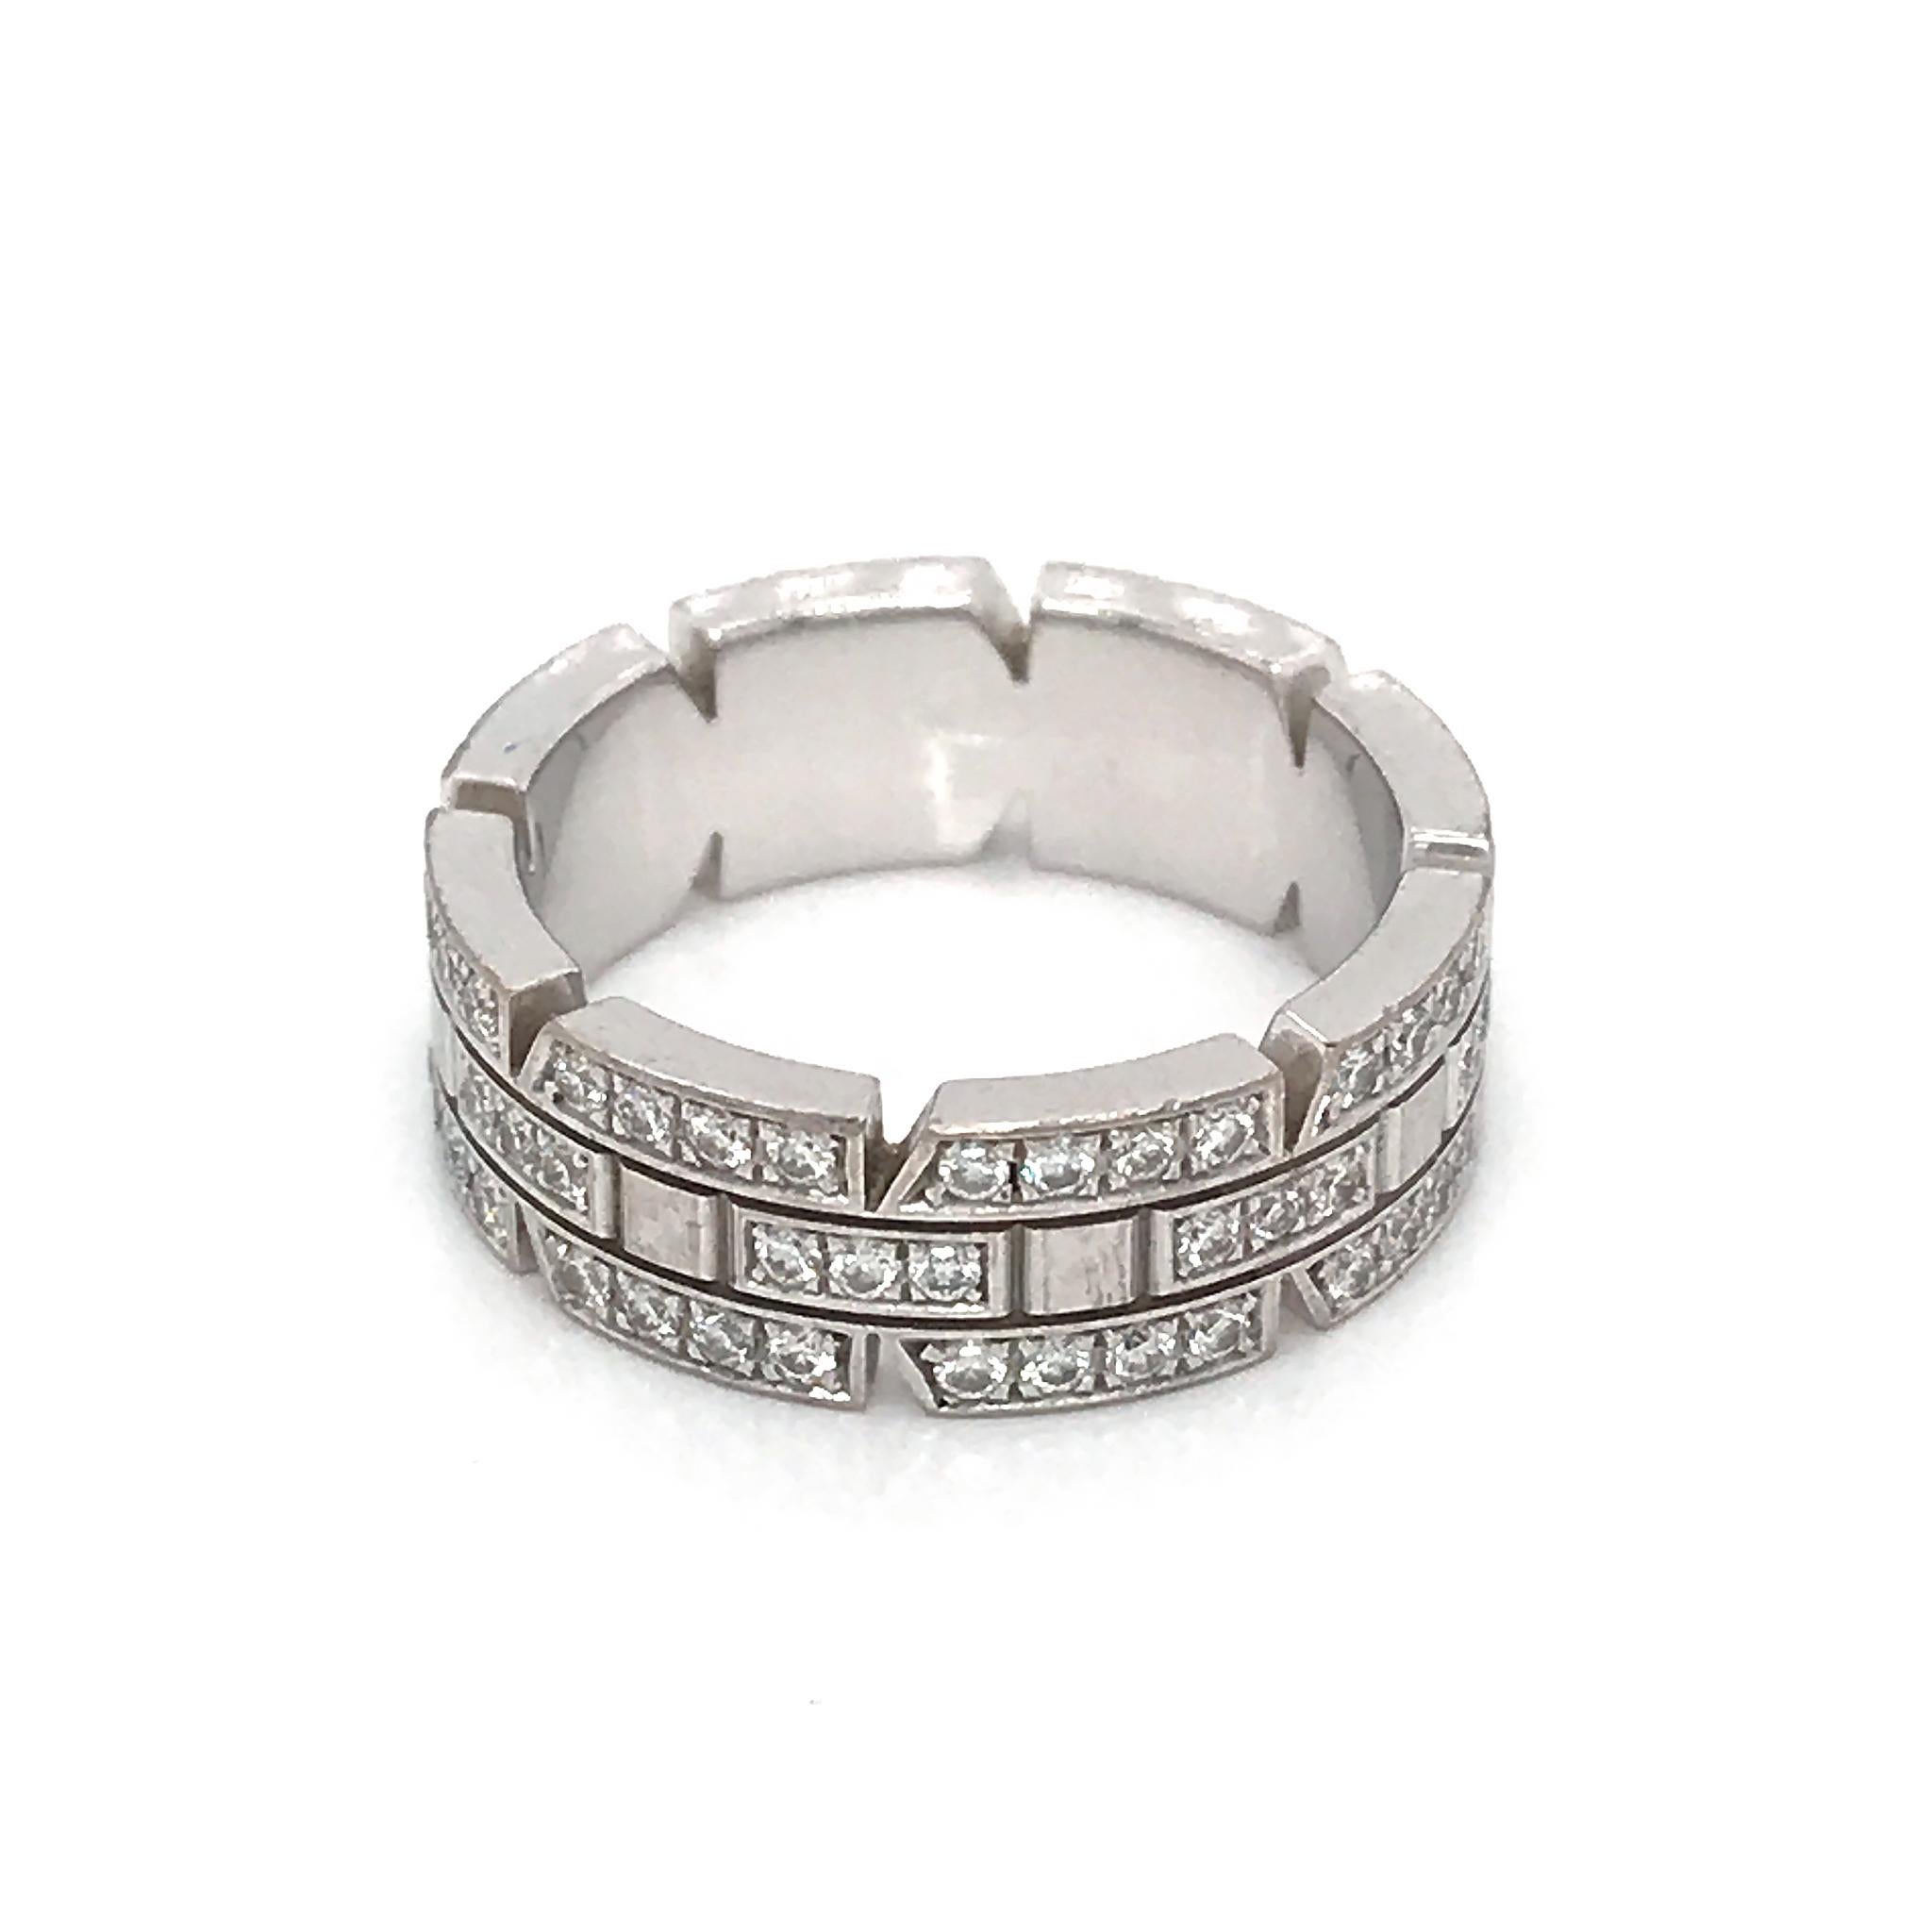 Cartier Tank Francaise Diamond Ring in White Gold
 7.8g 18K WG. 

Size: EU 49, US 5.25